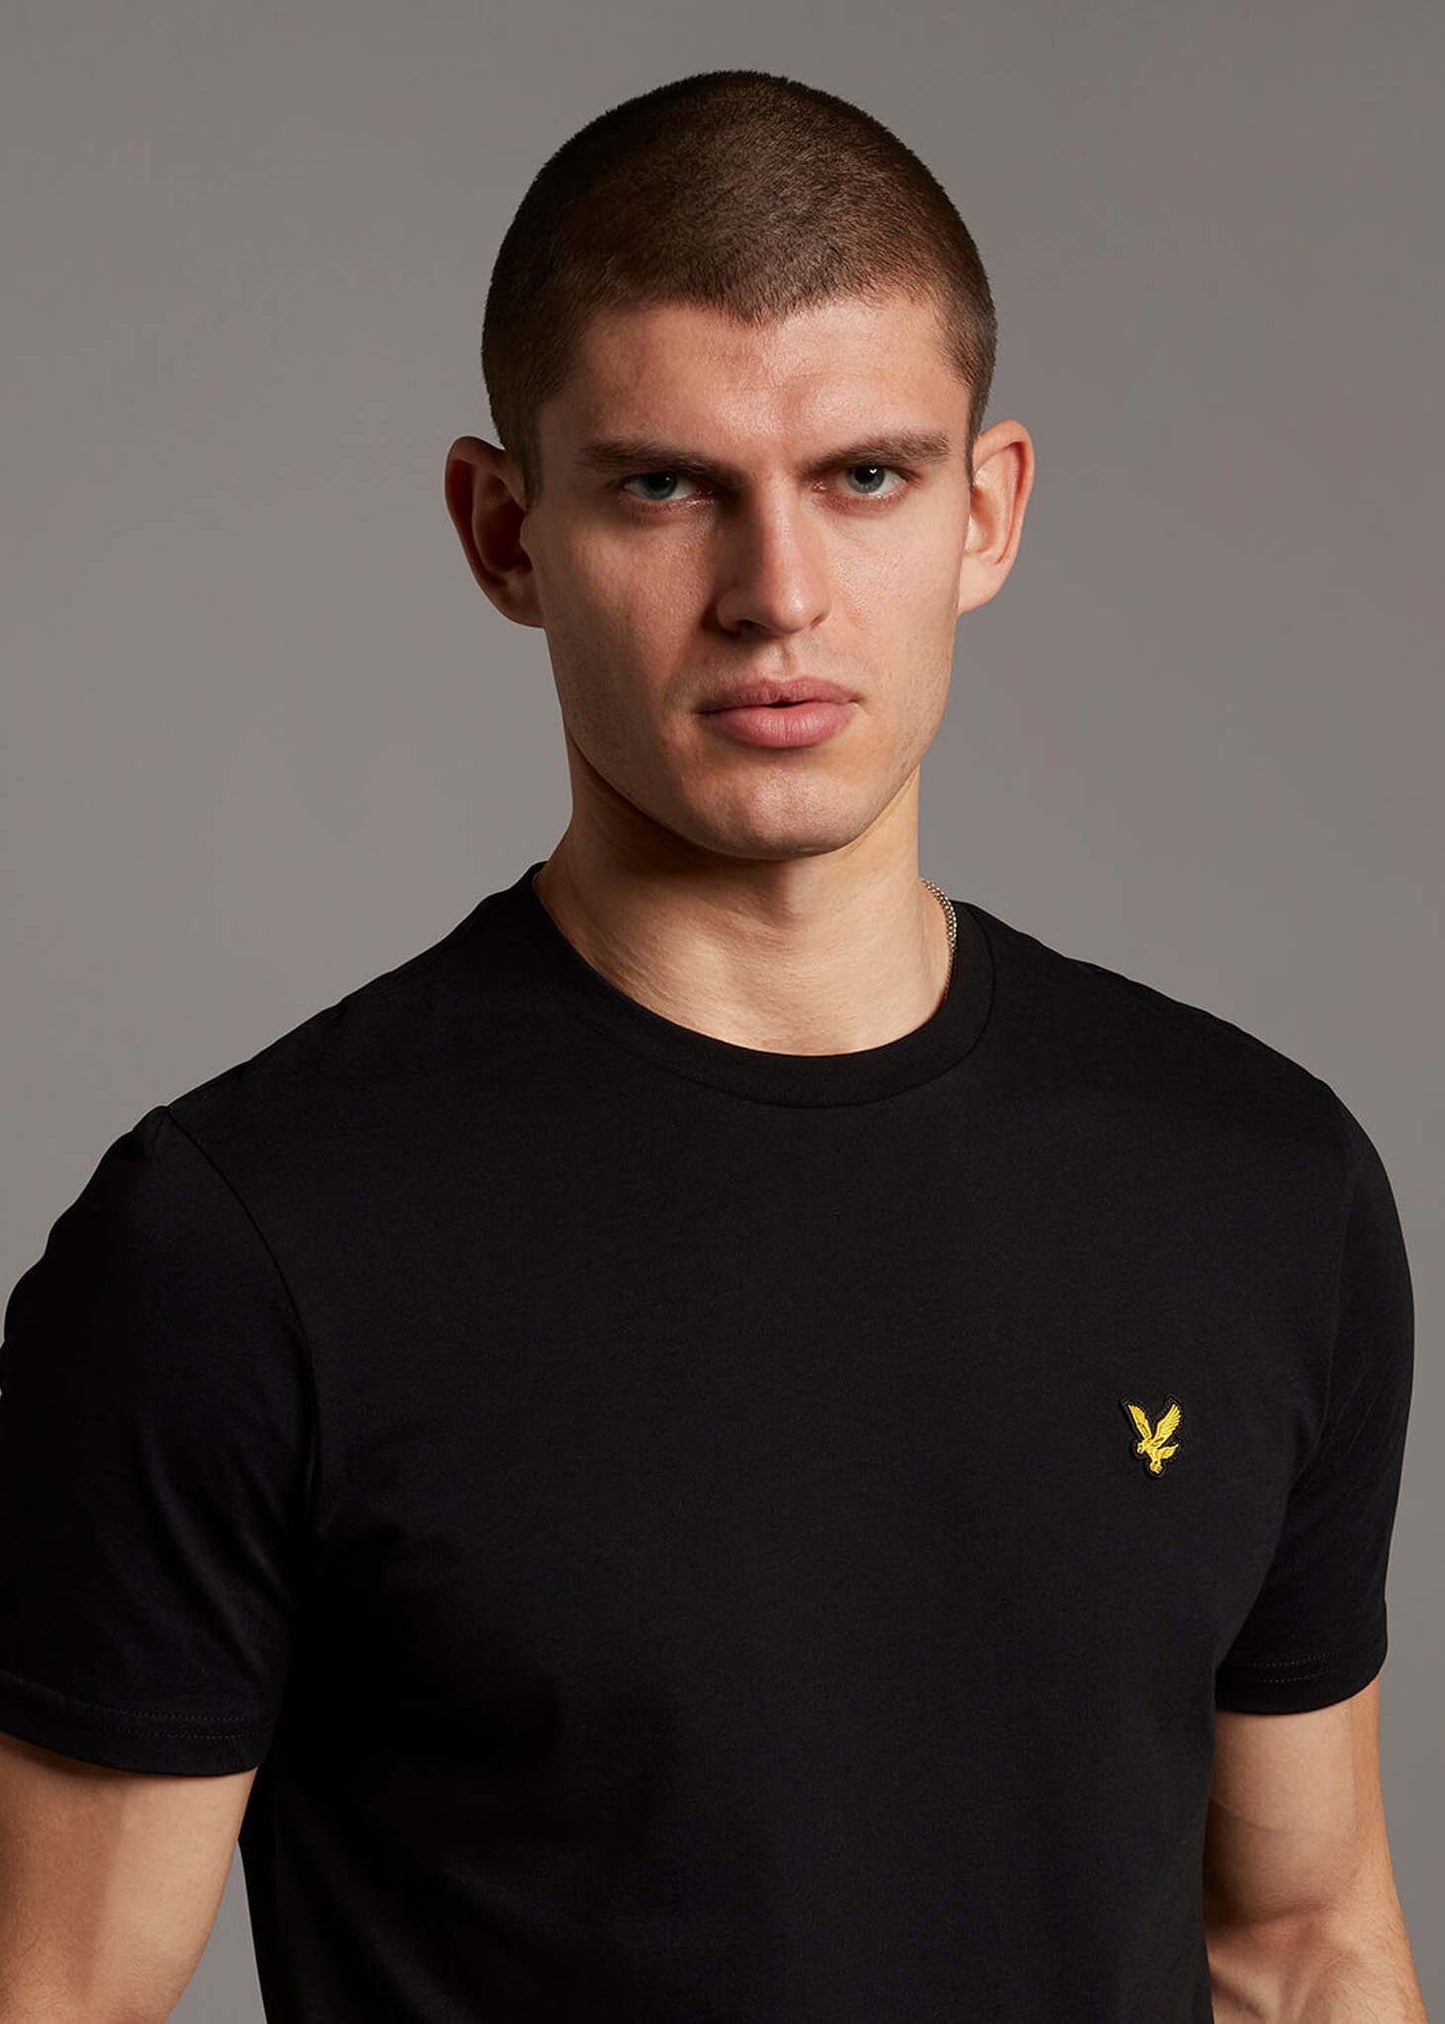 Lyle & Scott T-shirts  Crew neck t-shirt - jet black 